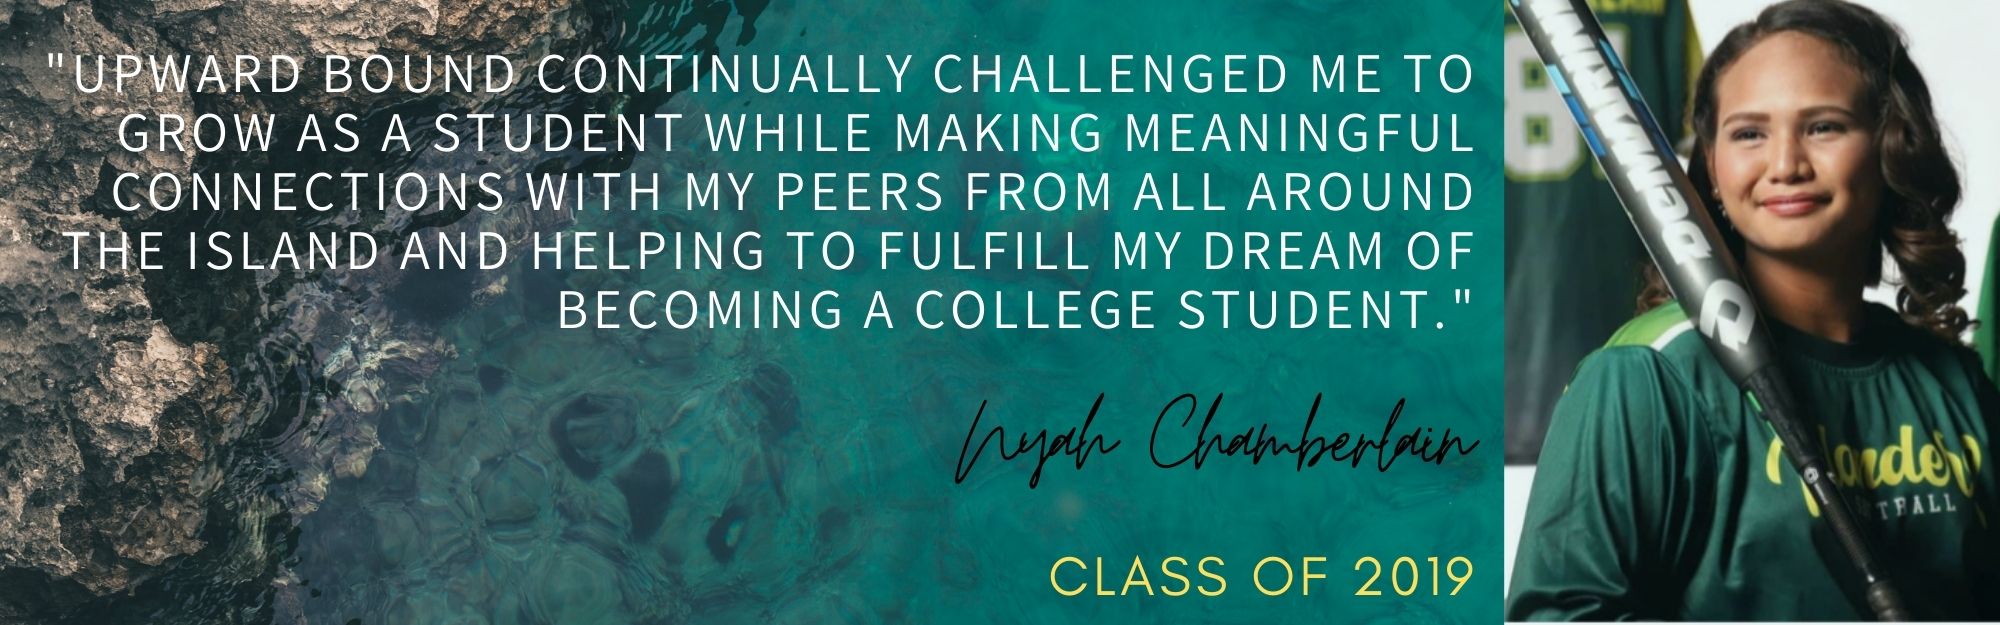 Myah , Chamberlain, Upward Bound Alumni, Class of 2019